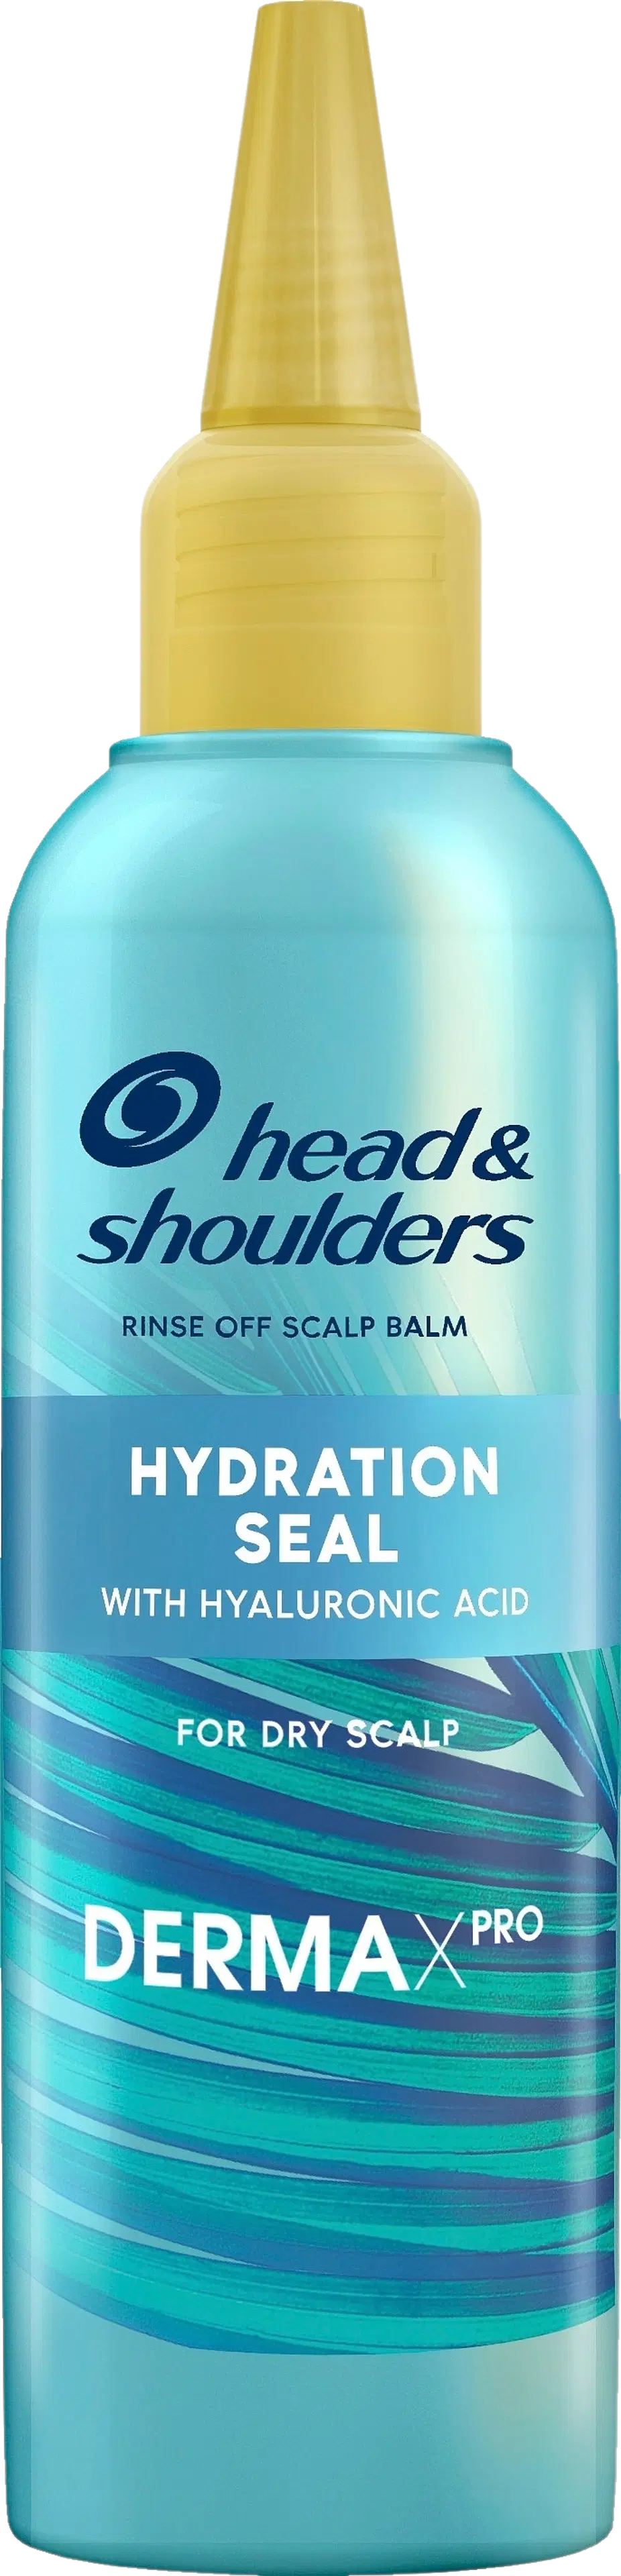 head&shoulders hoitoaine hiuspohjalle DermaX Pro Hydration Seal 145ml